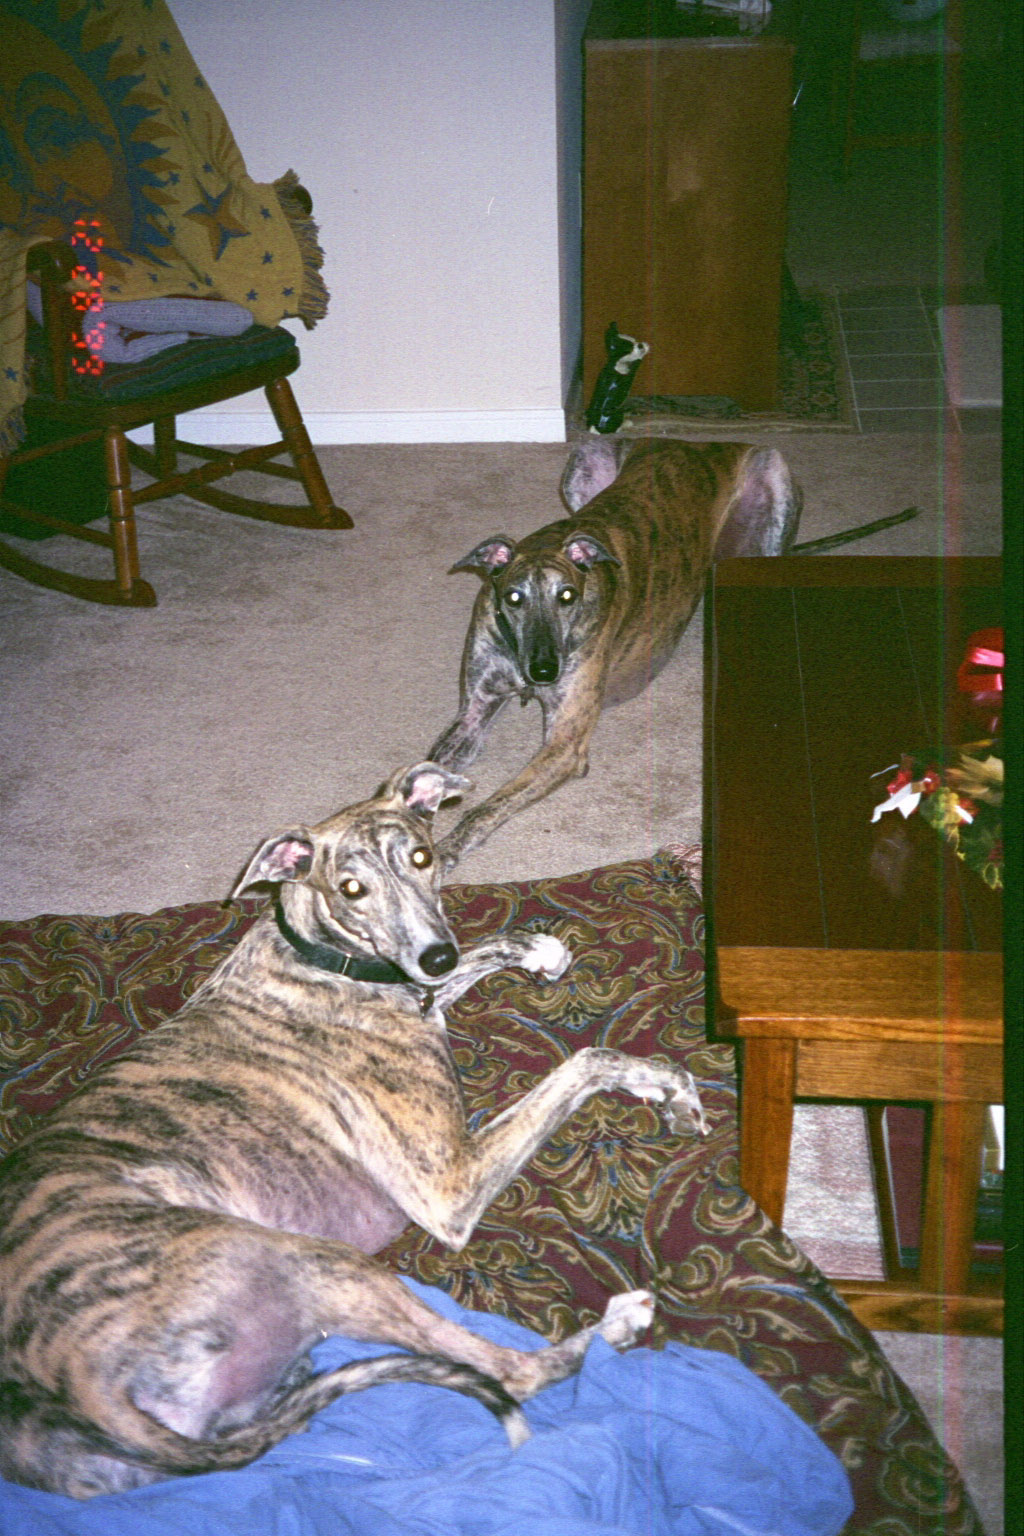 Naya (Michael's rescued greyhound) and Nevada (Jeff and Steph's greyhound)